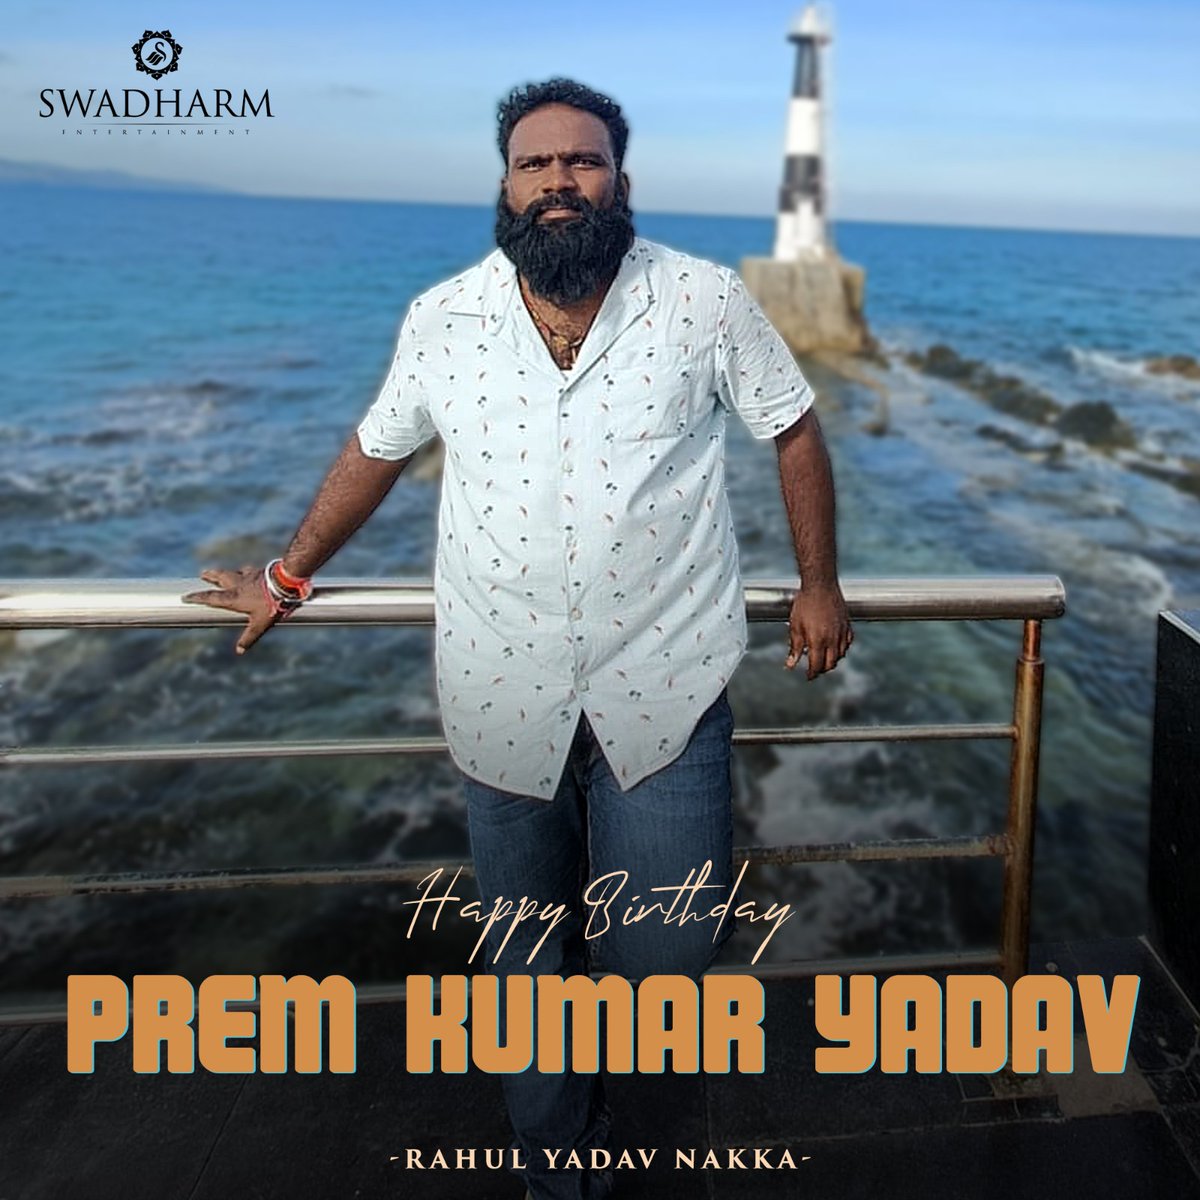 Wish you a Very Happy Birthday Prem Kumar Yadav! May you achieve the greater heights in the coming year. #premkumaryadav #hbdprem @RahulYadavNakka